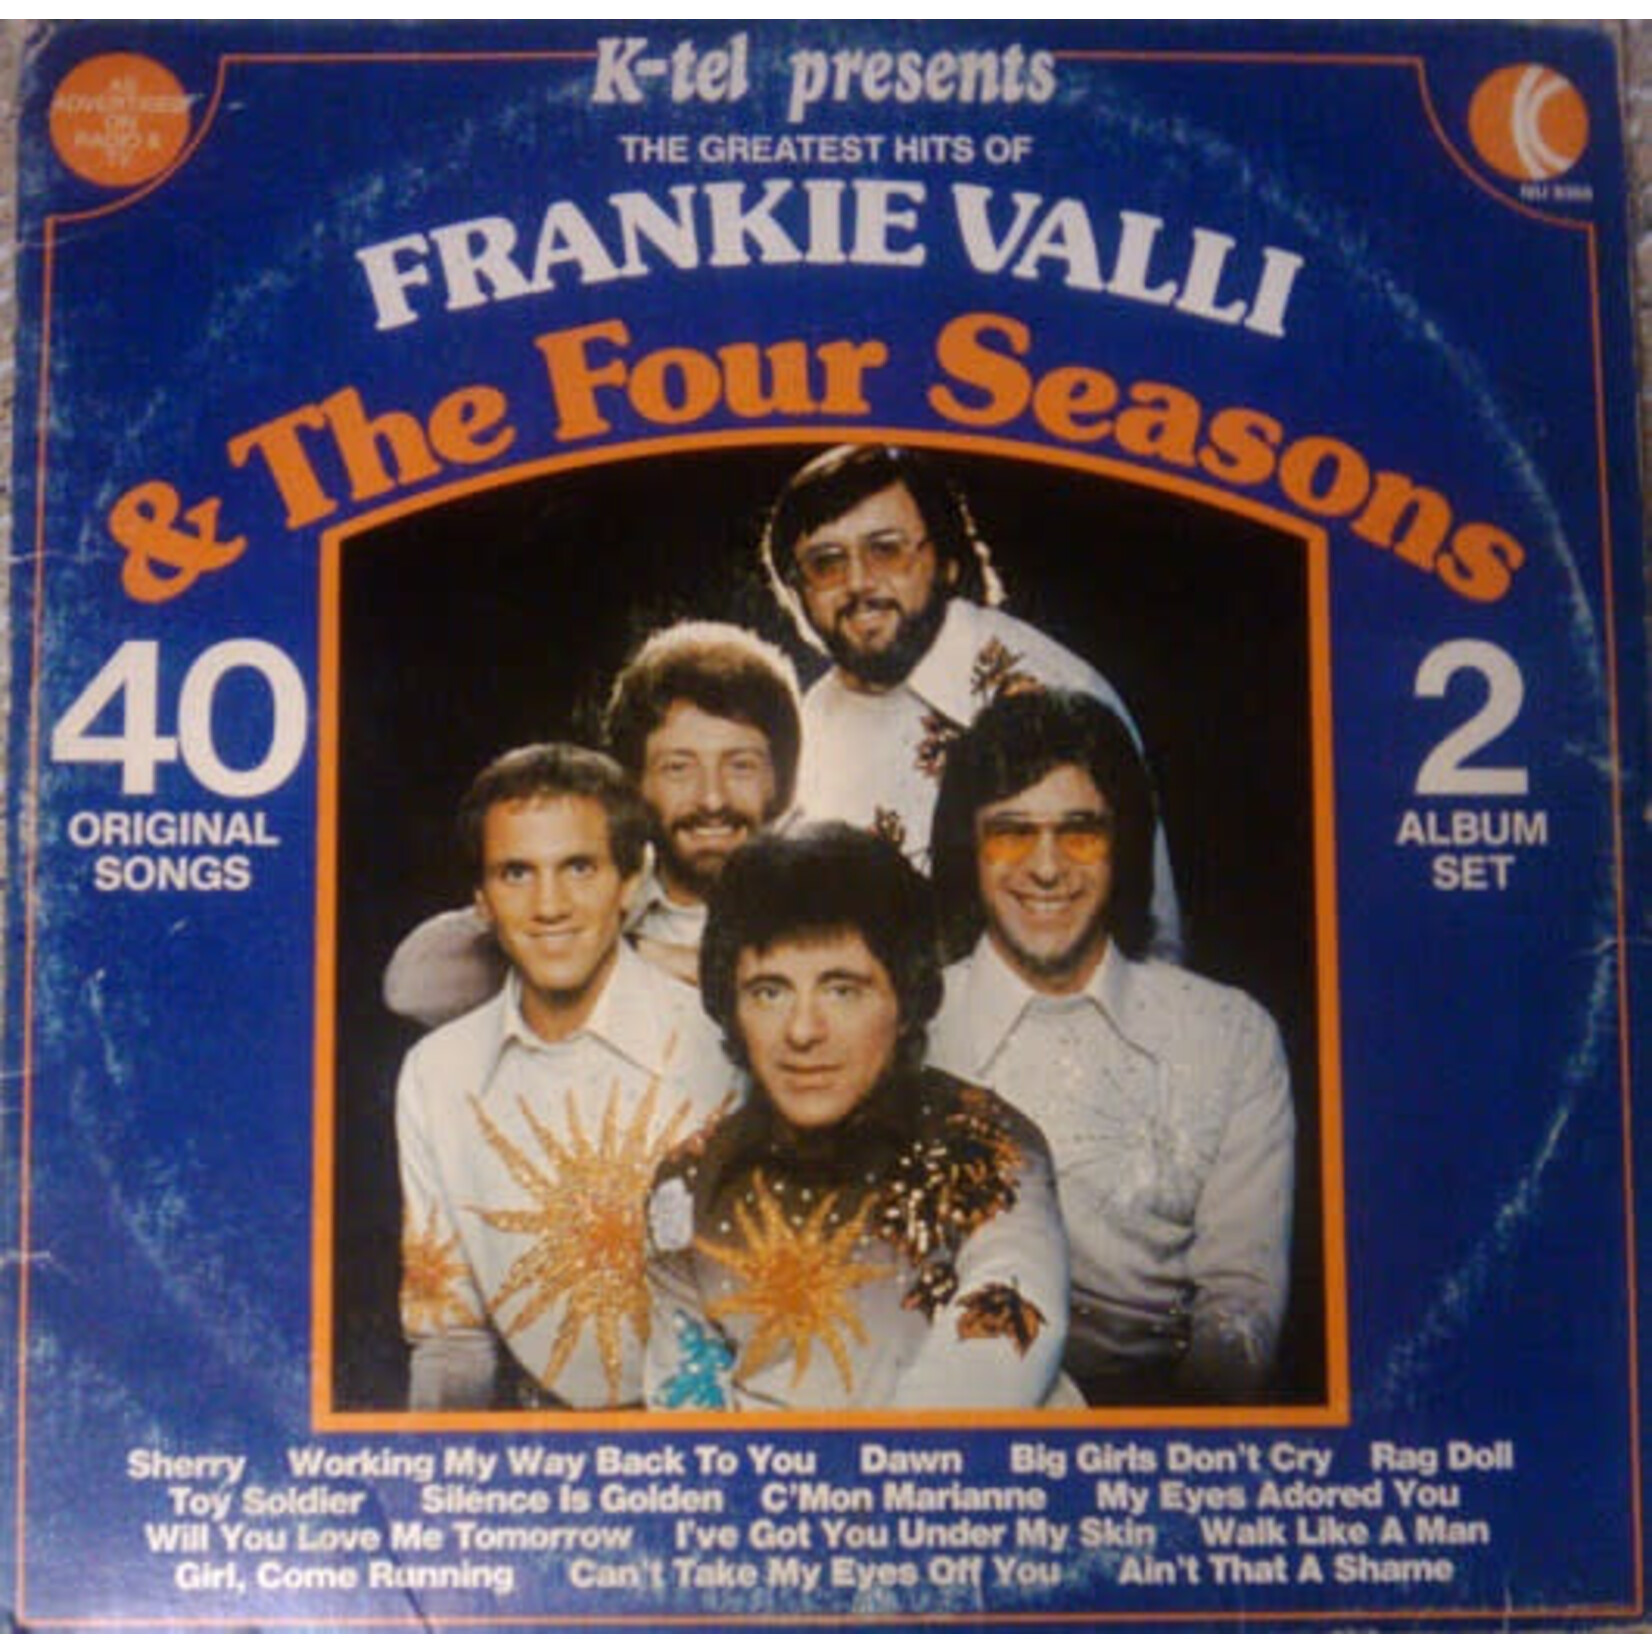 [Vintage] Valli, Frankie & The Four Seasons: The Greatest Hits Of (2lp K-tel)[VINTAGE]